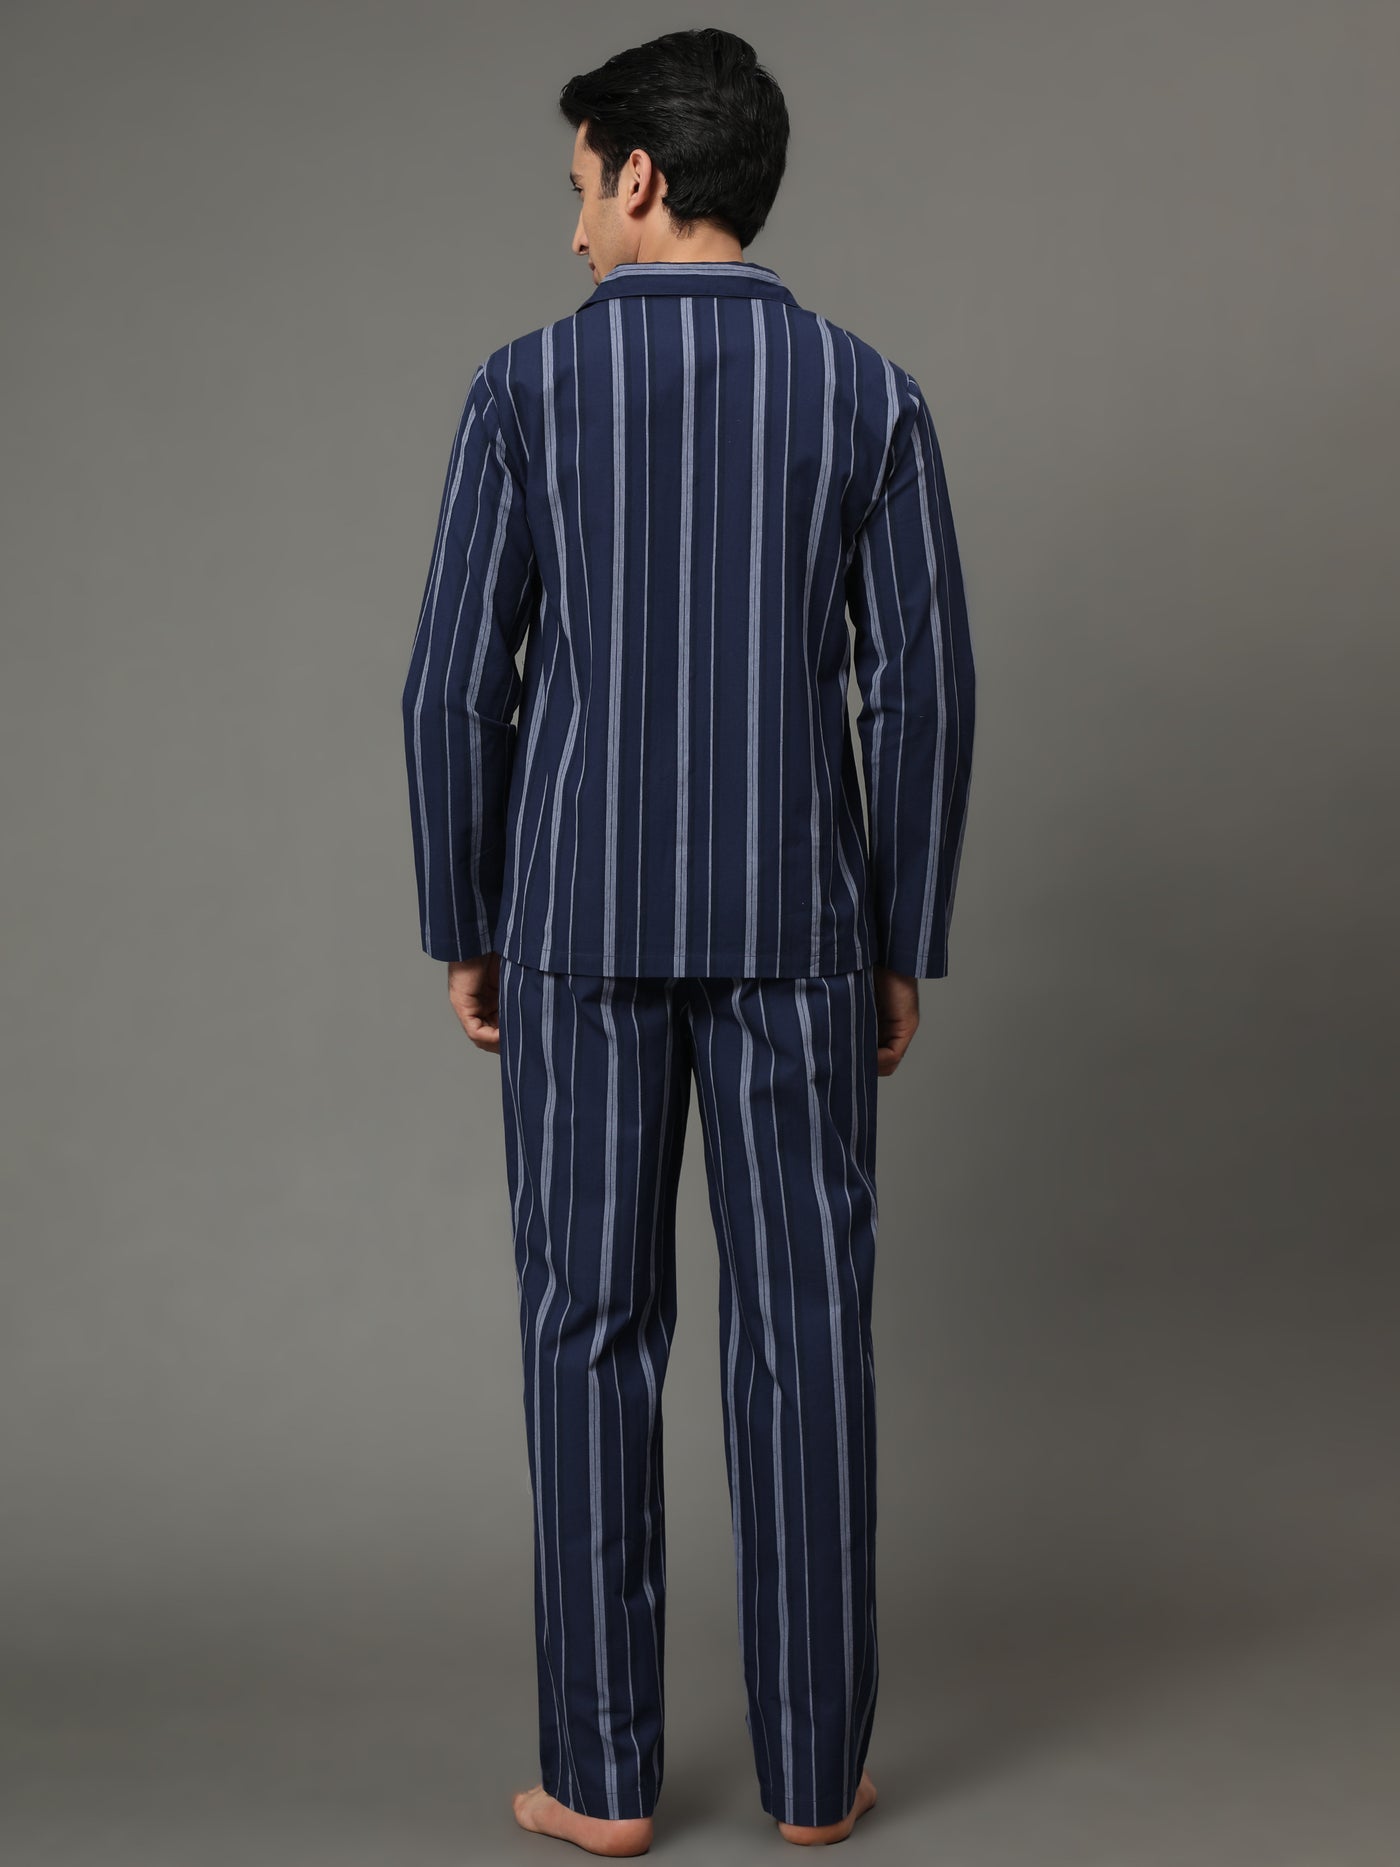 Pyjama Set for Men-Navy Stripes